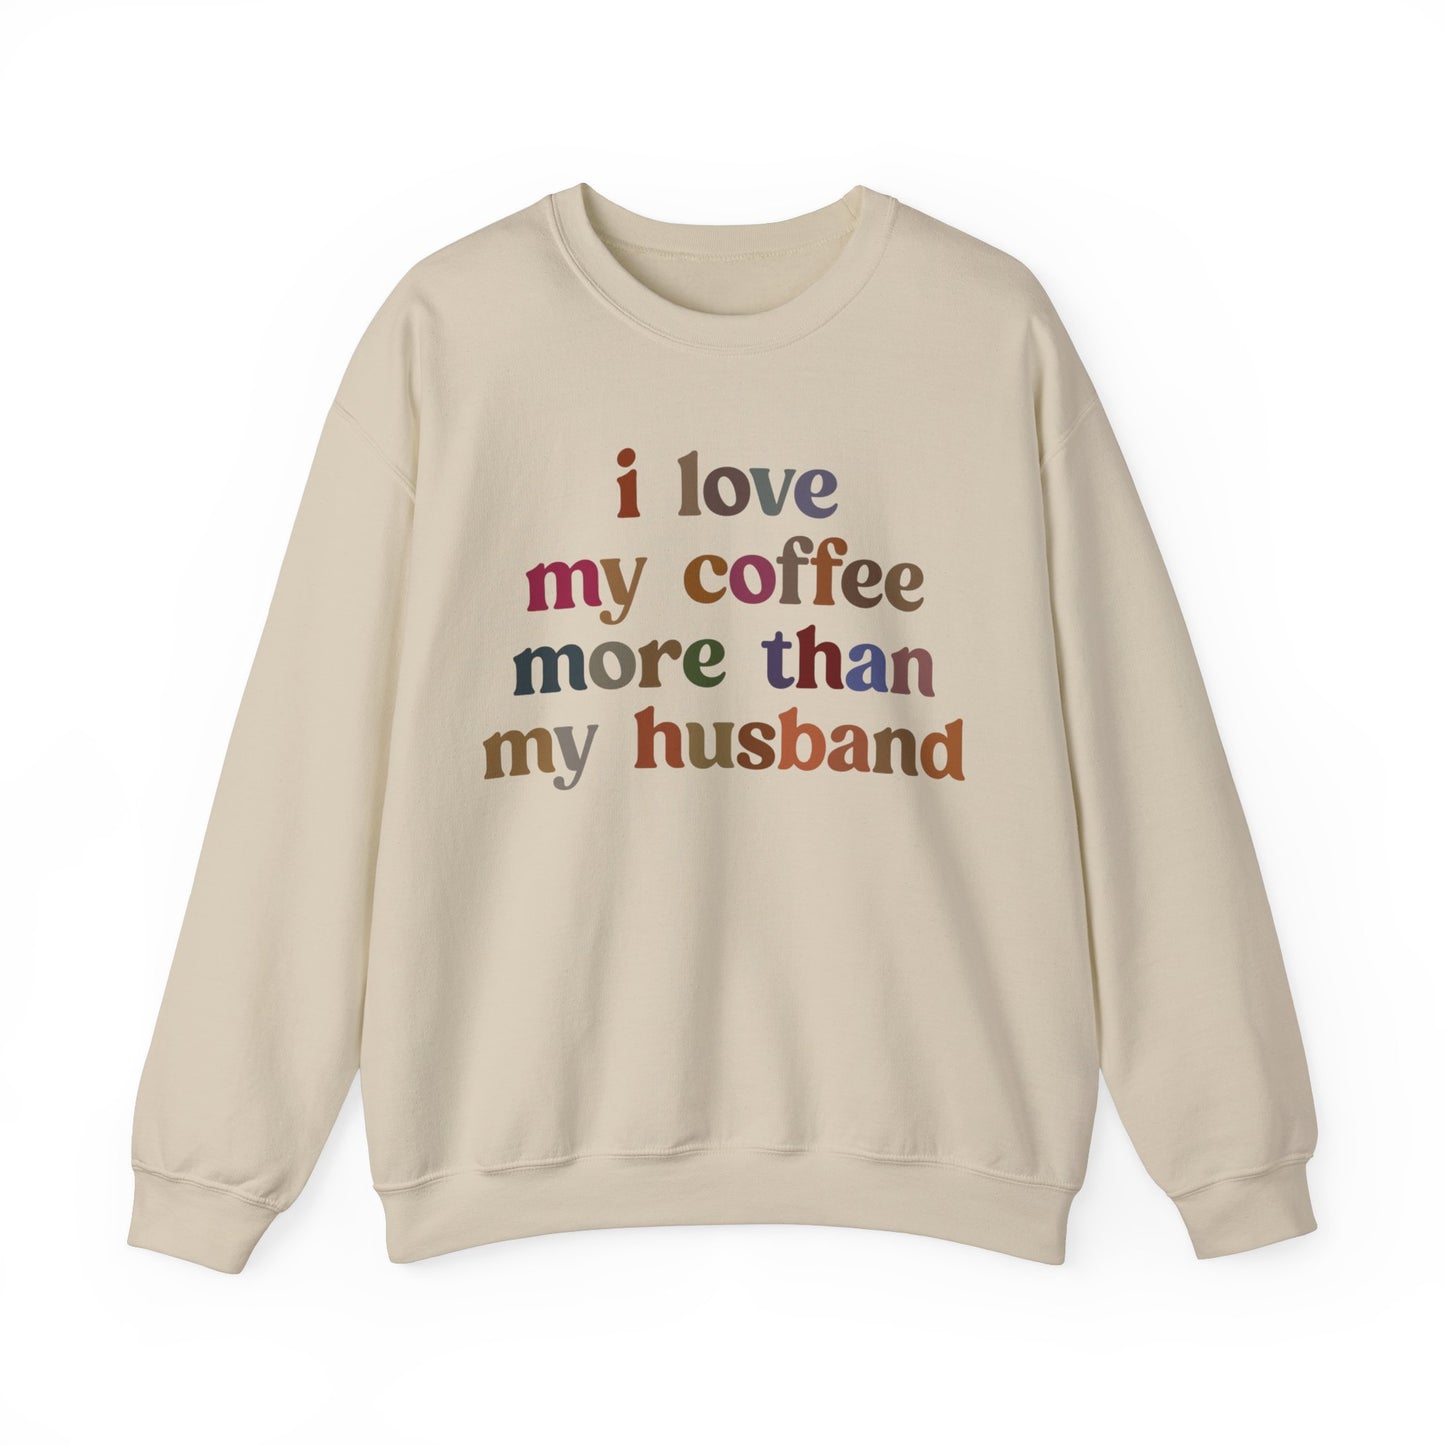 I Love My Coffee More Than My Husband Sweatshirt, Funny Coffee Lover Sweatshirt, Husband Gift, Gift For Husband Gift for lover Coffee, S1439